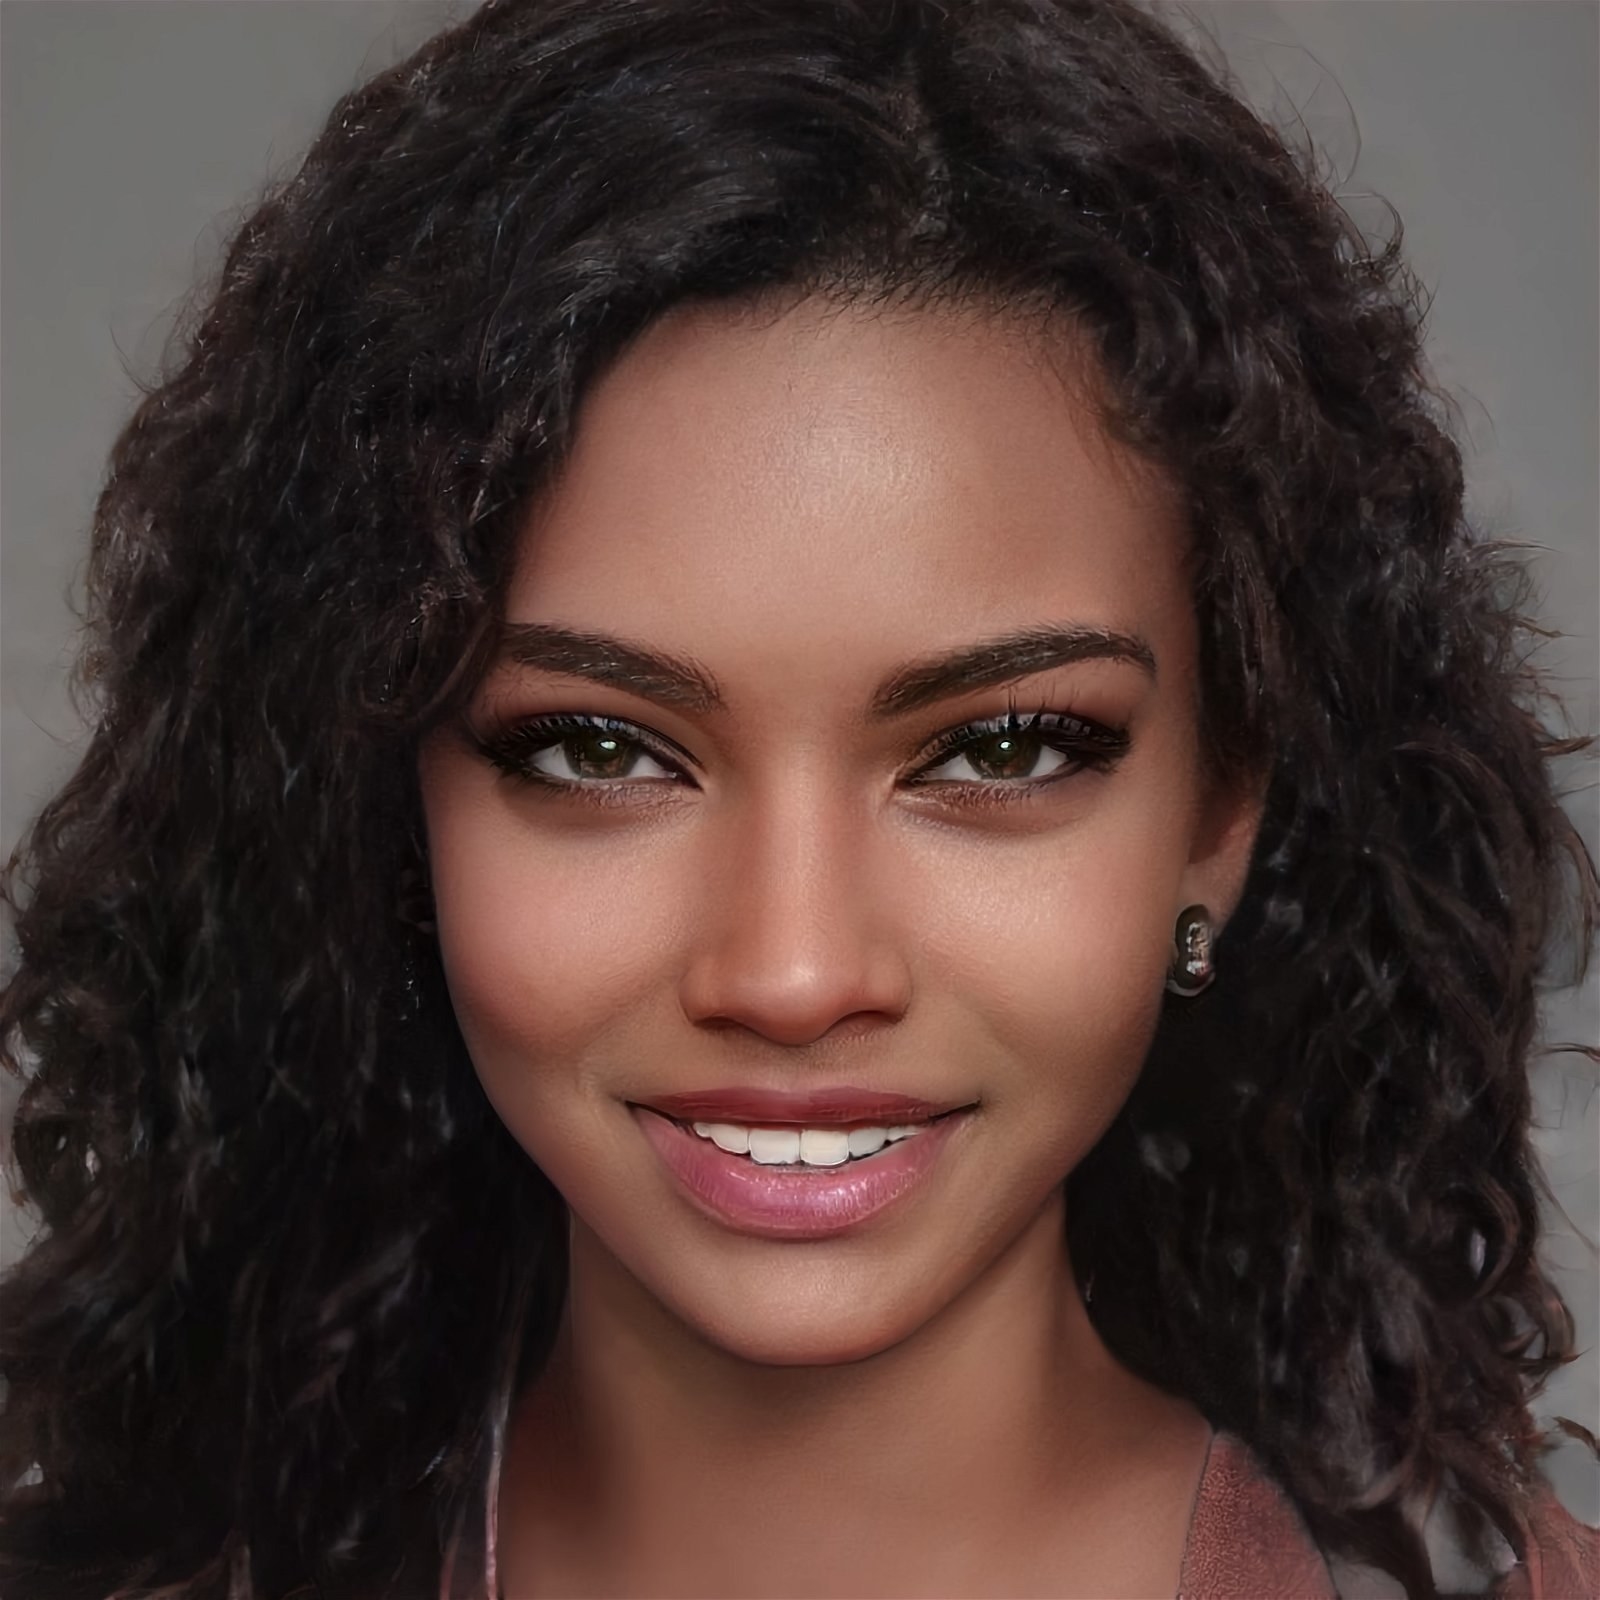 A teenage girl with brown skin, black hair, and brown eyes